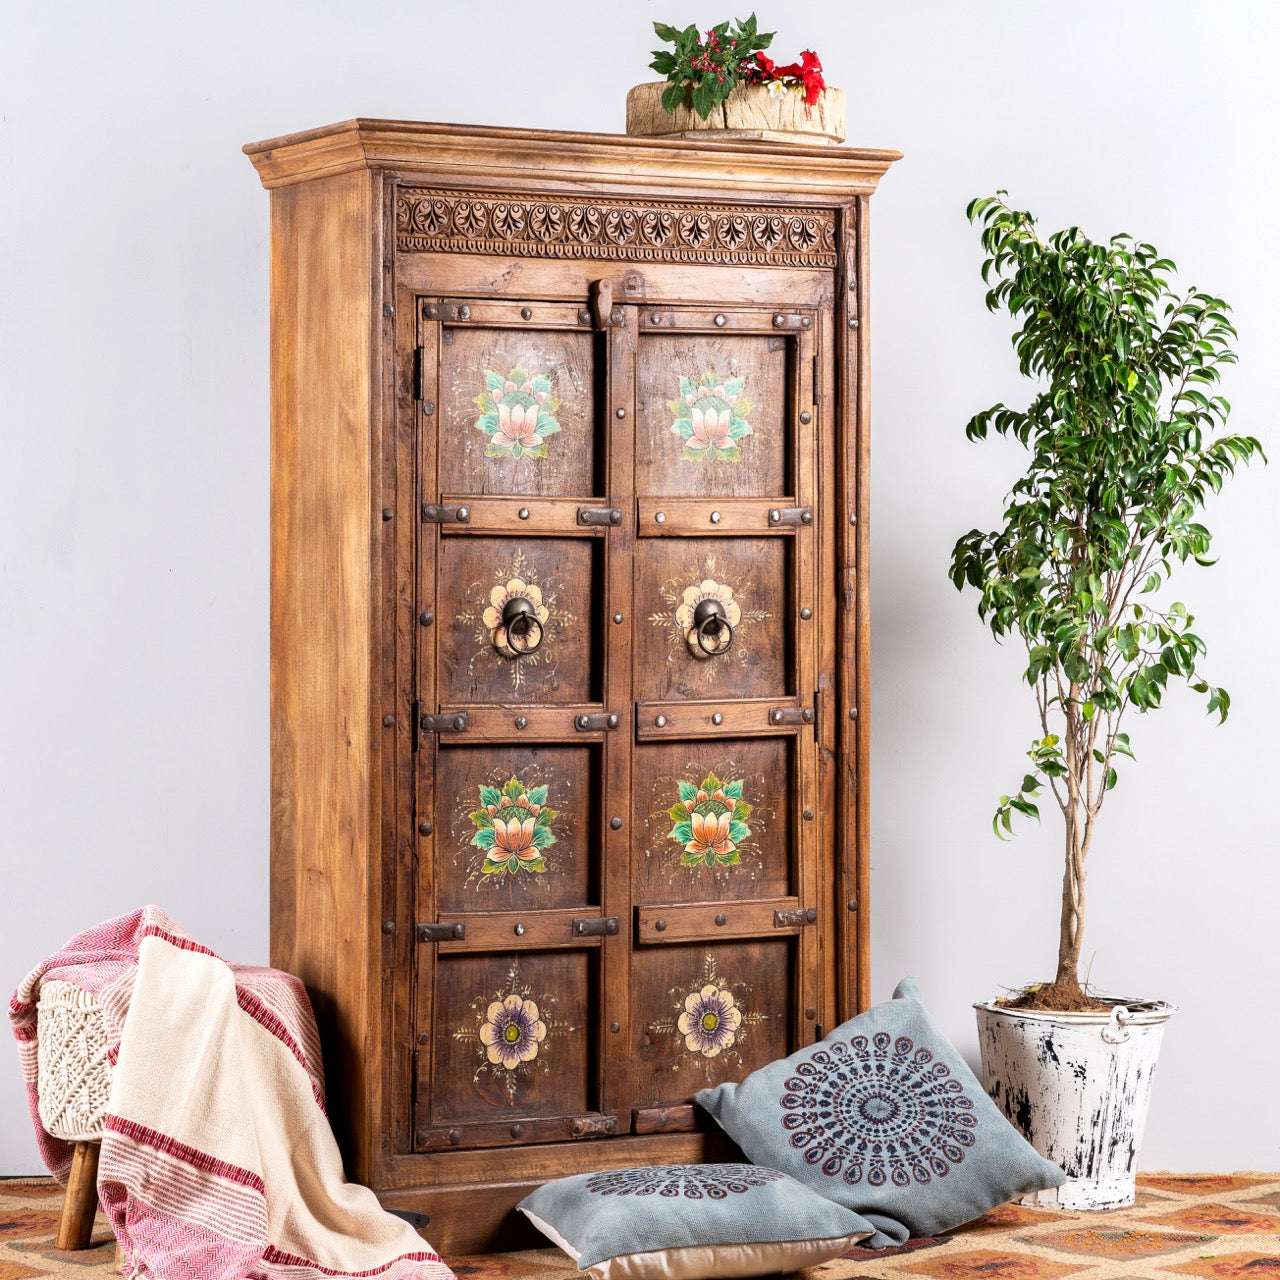 Quabil, vintage cupboard with floral motifs